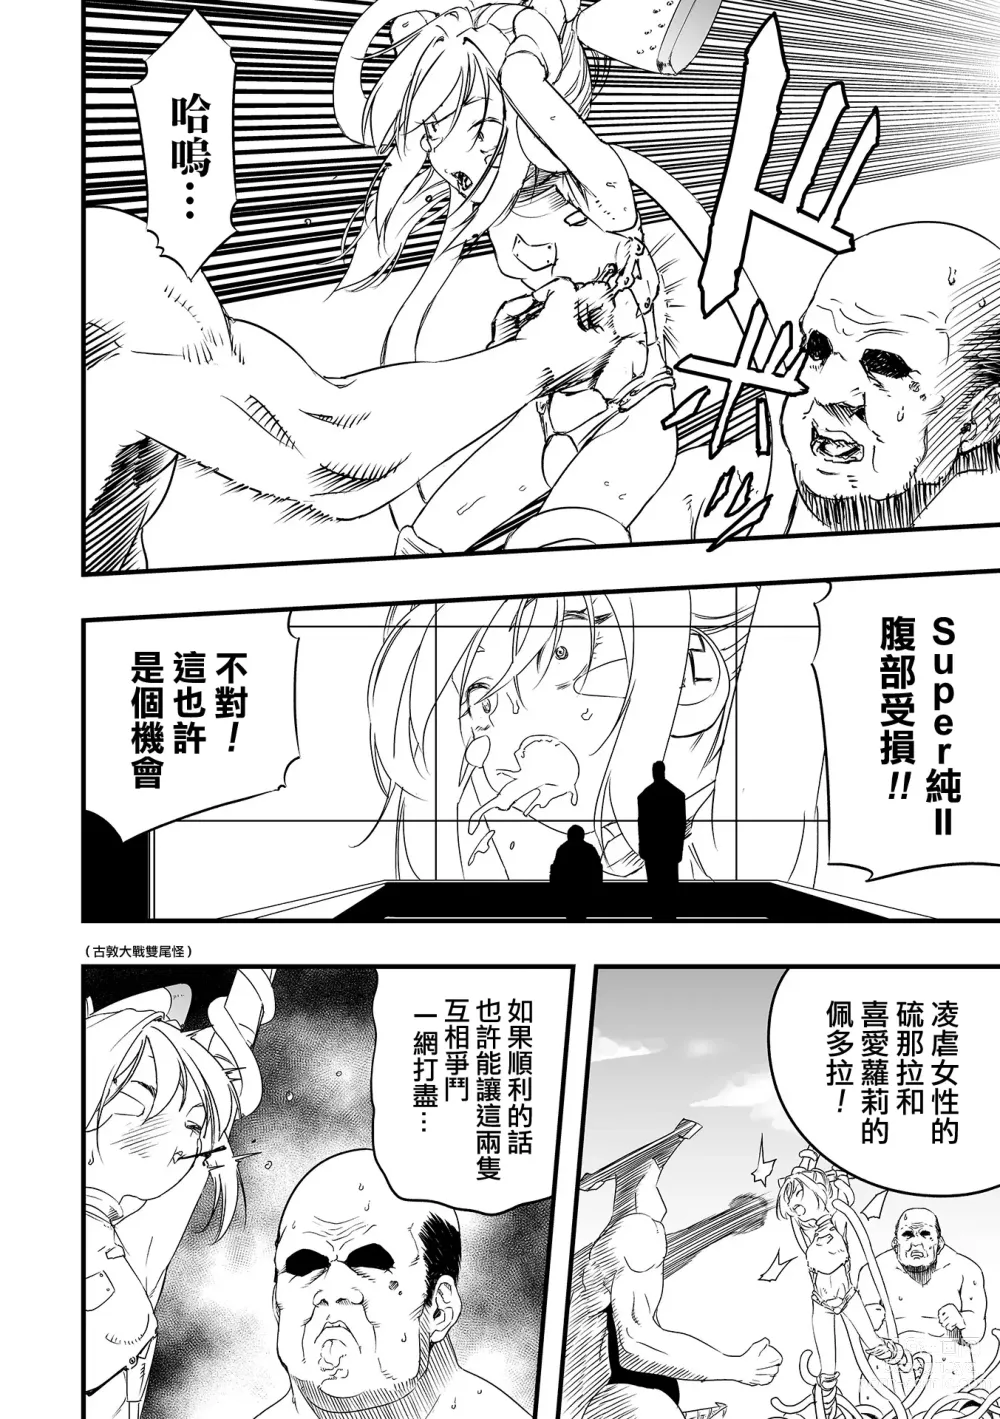 Page 11 of manga 硫那拉 vs 佩多拉